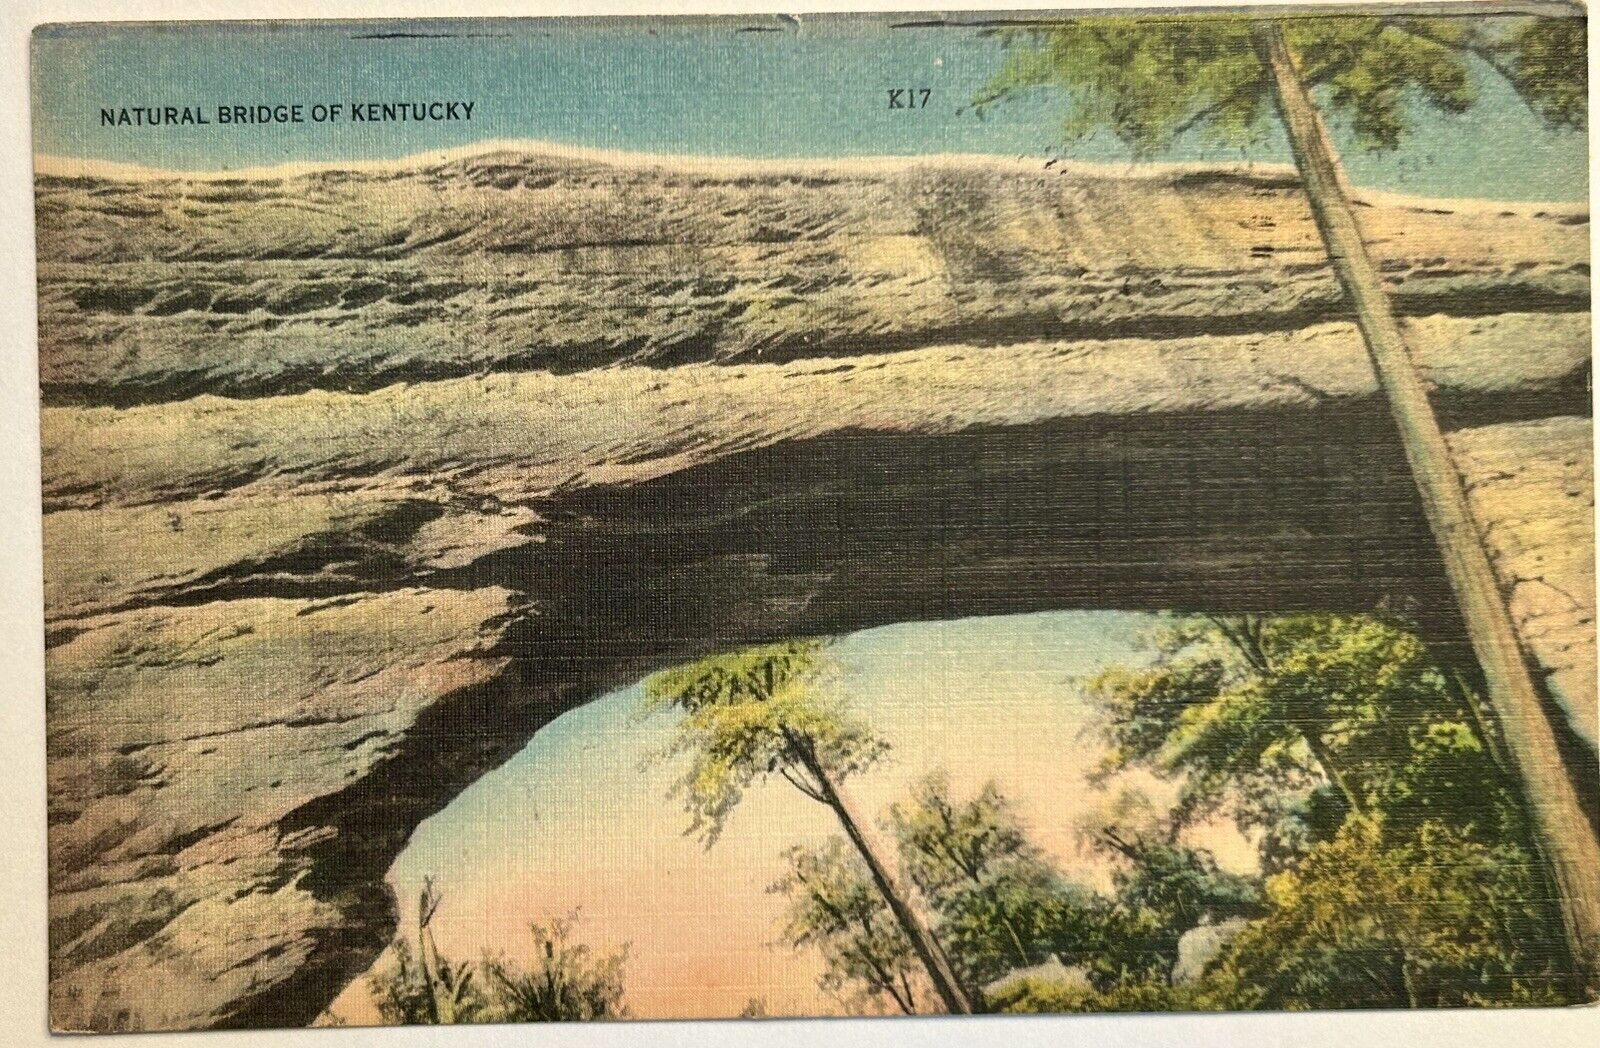 NATURAL BRIDGE OF KENTUCKY 1955 Vintage Postcard